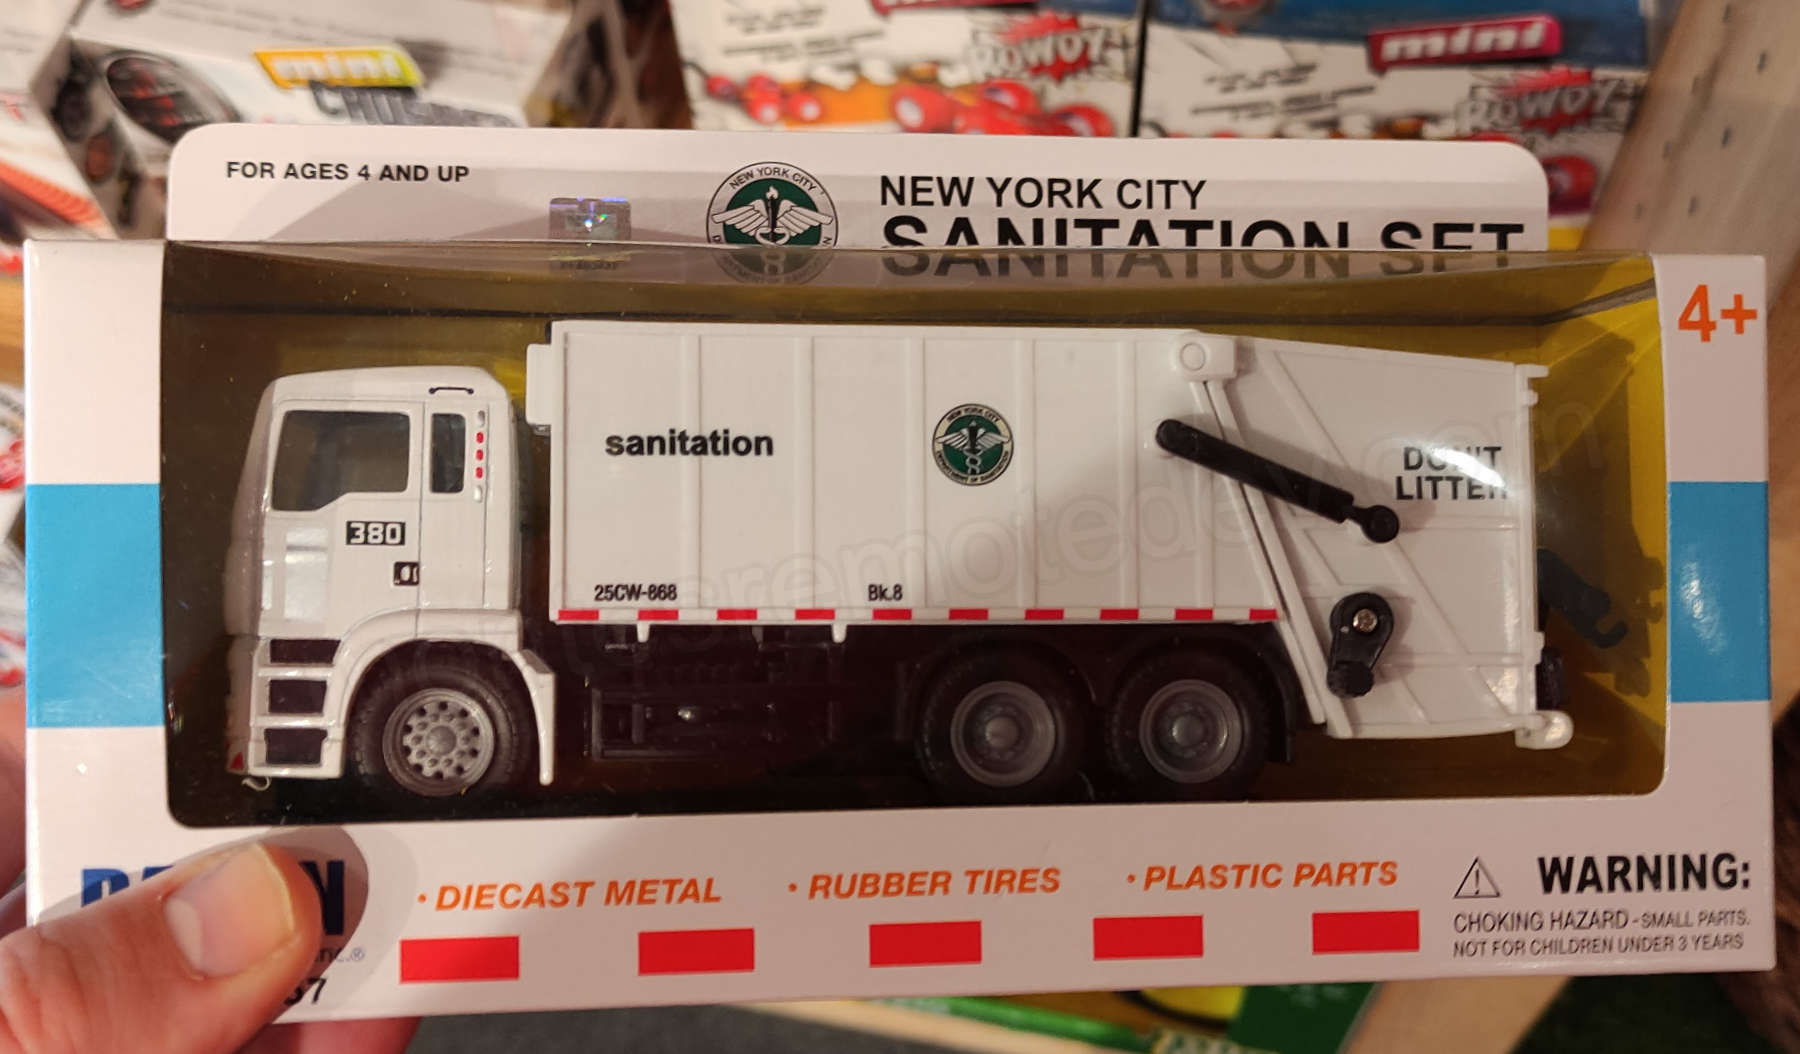 New York public services toys